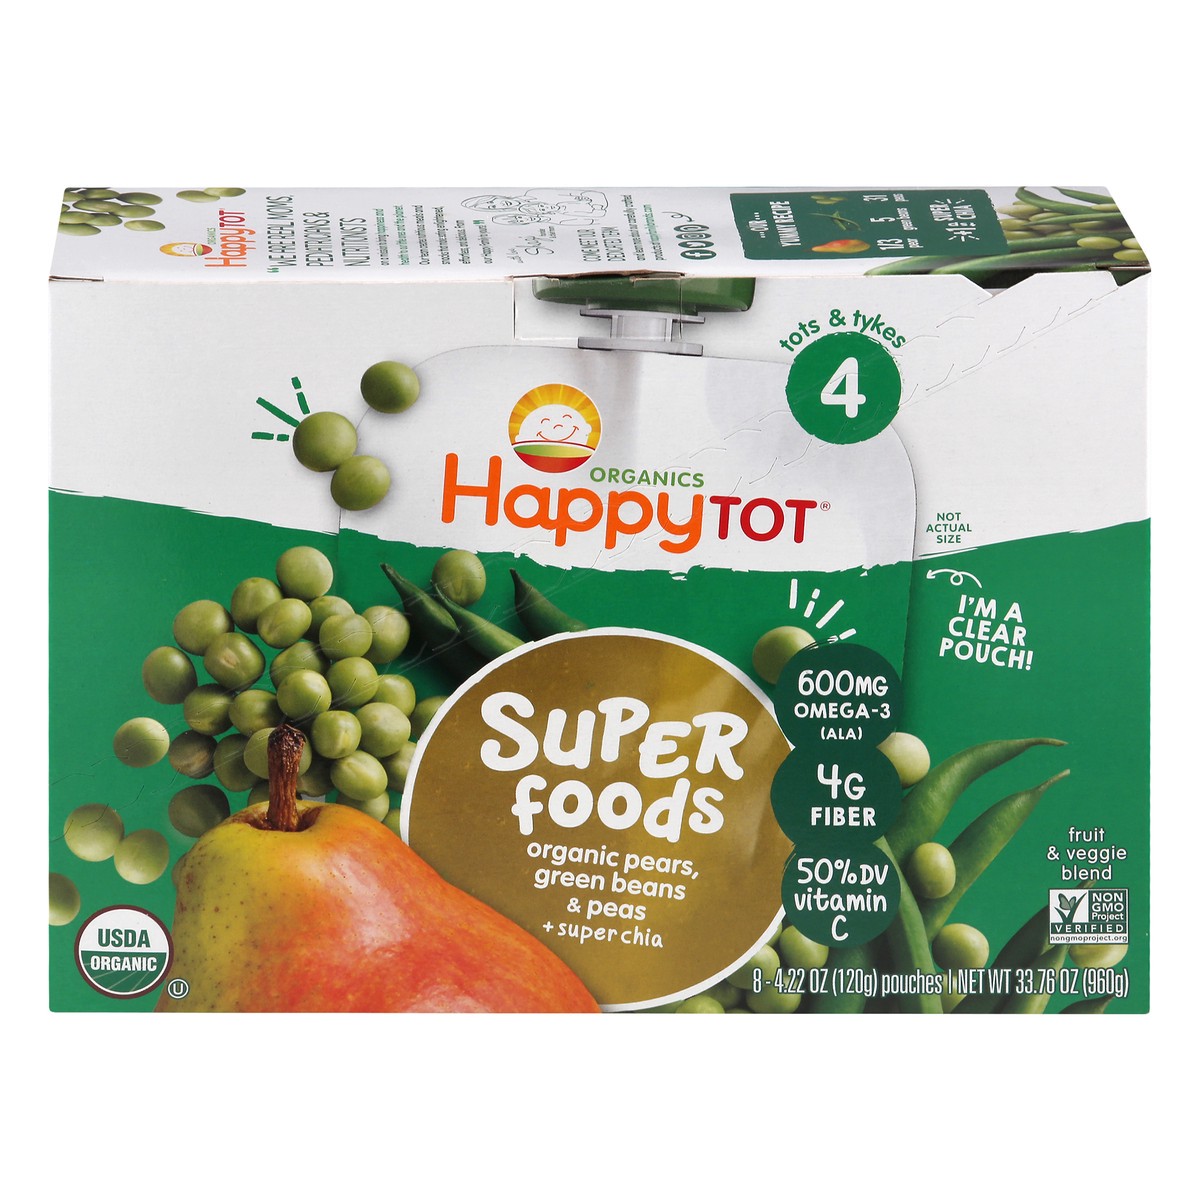 slide 1 of 12, Happy Tot Organics Super Foods 4 (Tots & Tykes) Pears, Green Beans & Peas + Super Chia Fruit & Veggie Blend 8 ea, 8 ct